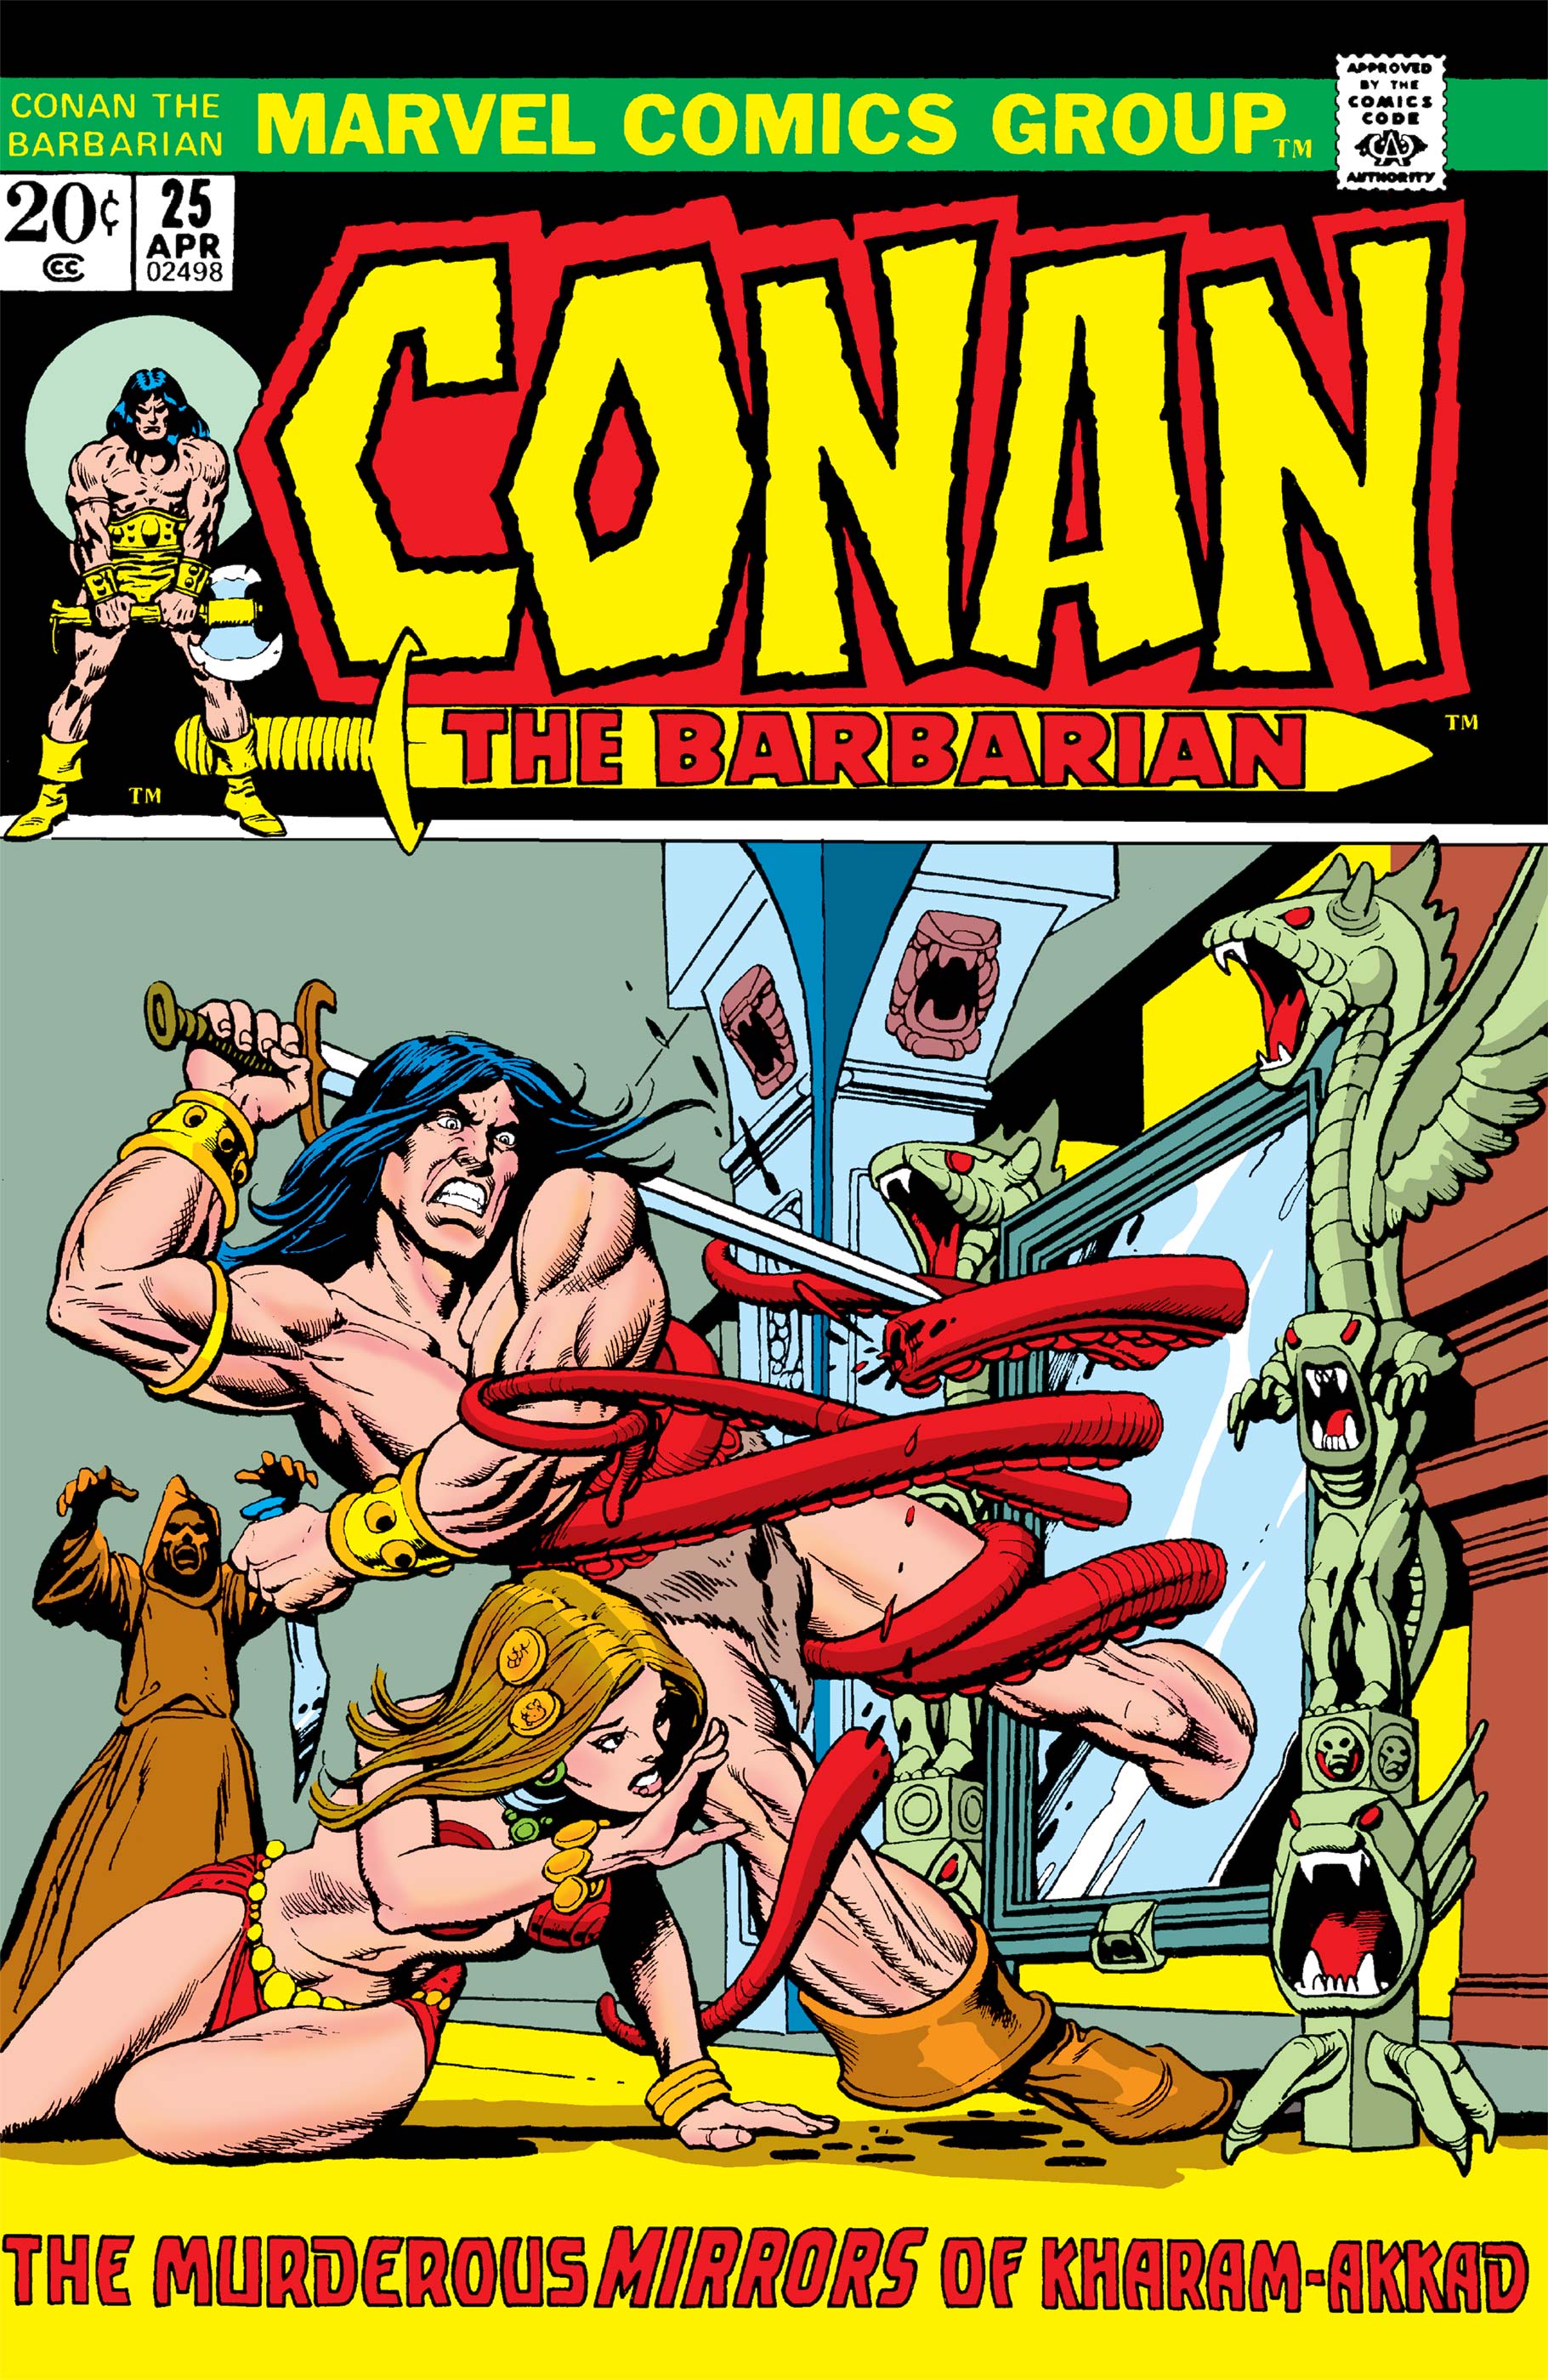 Conan the Barbarian (1970) #25